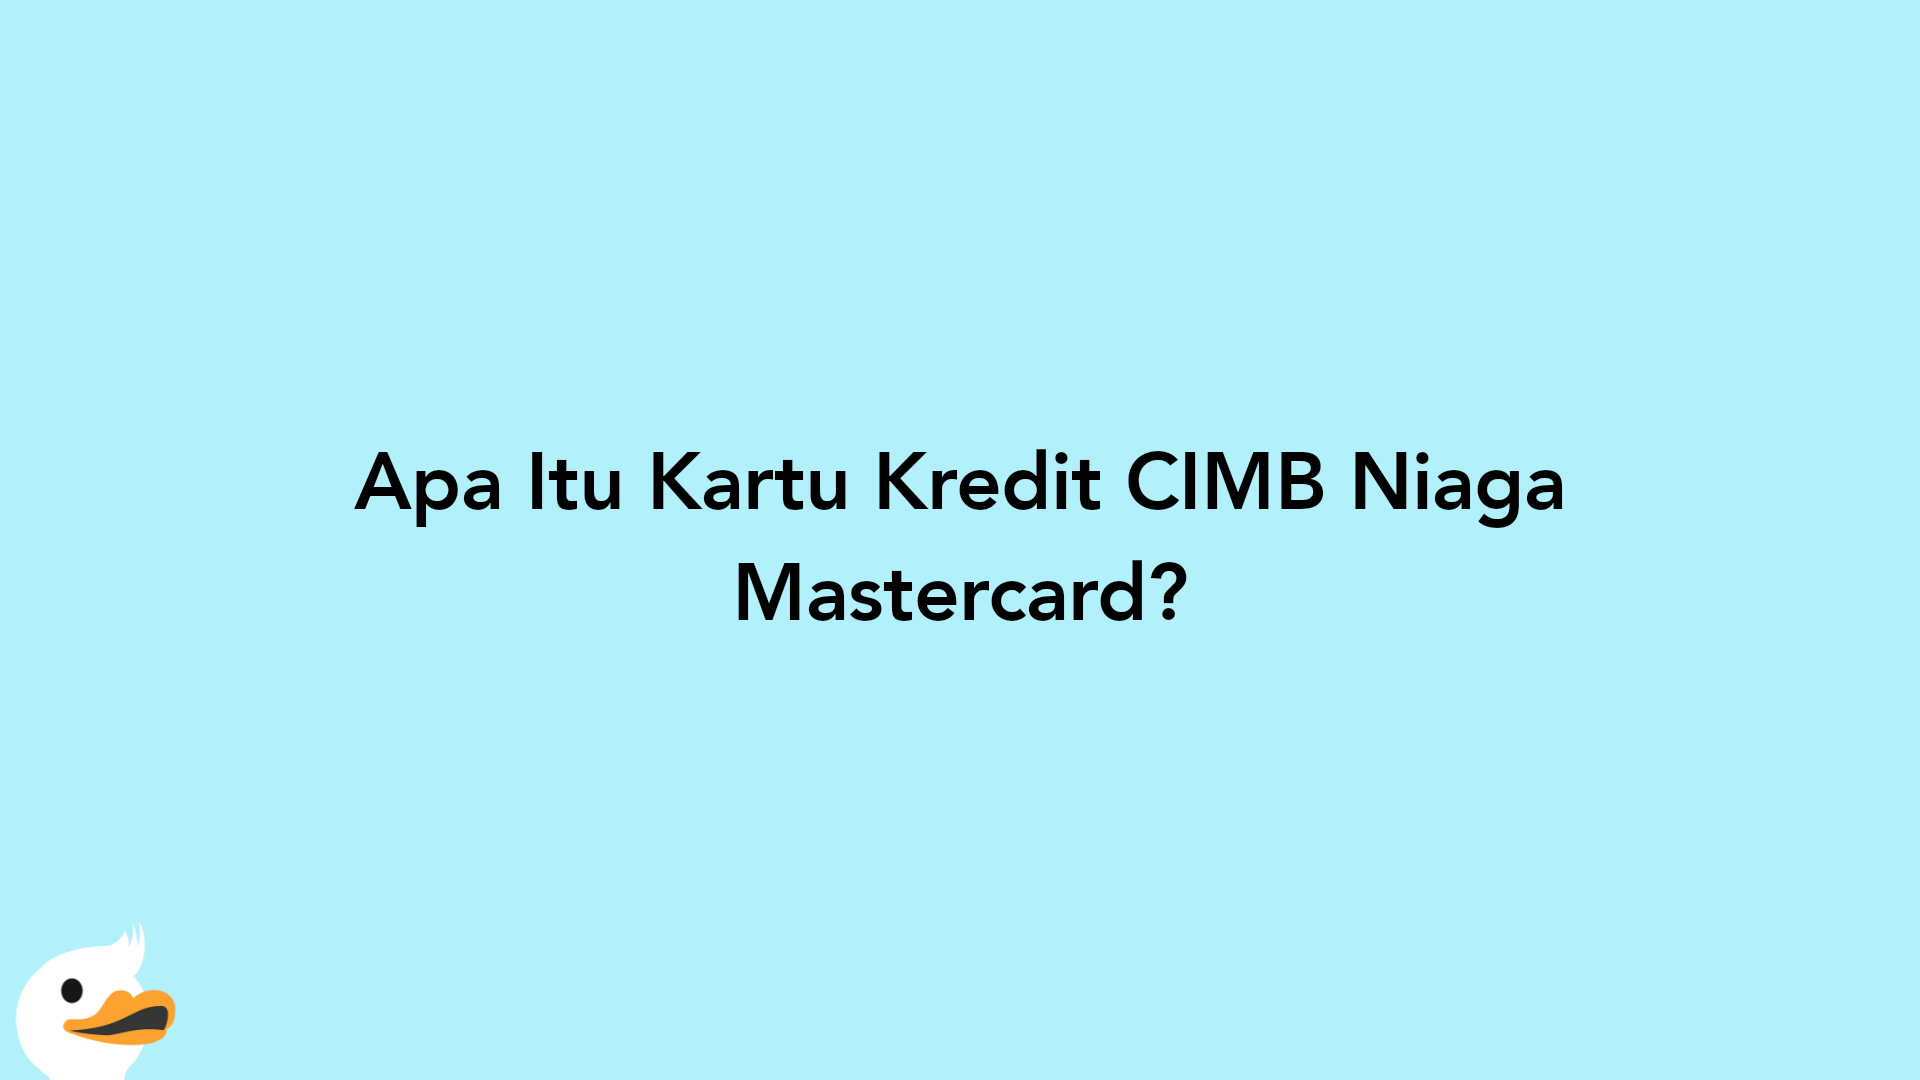 Apa Itu Kartu Kredit CIMB Niaga Mastercard?